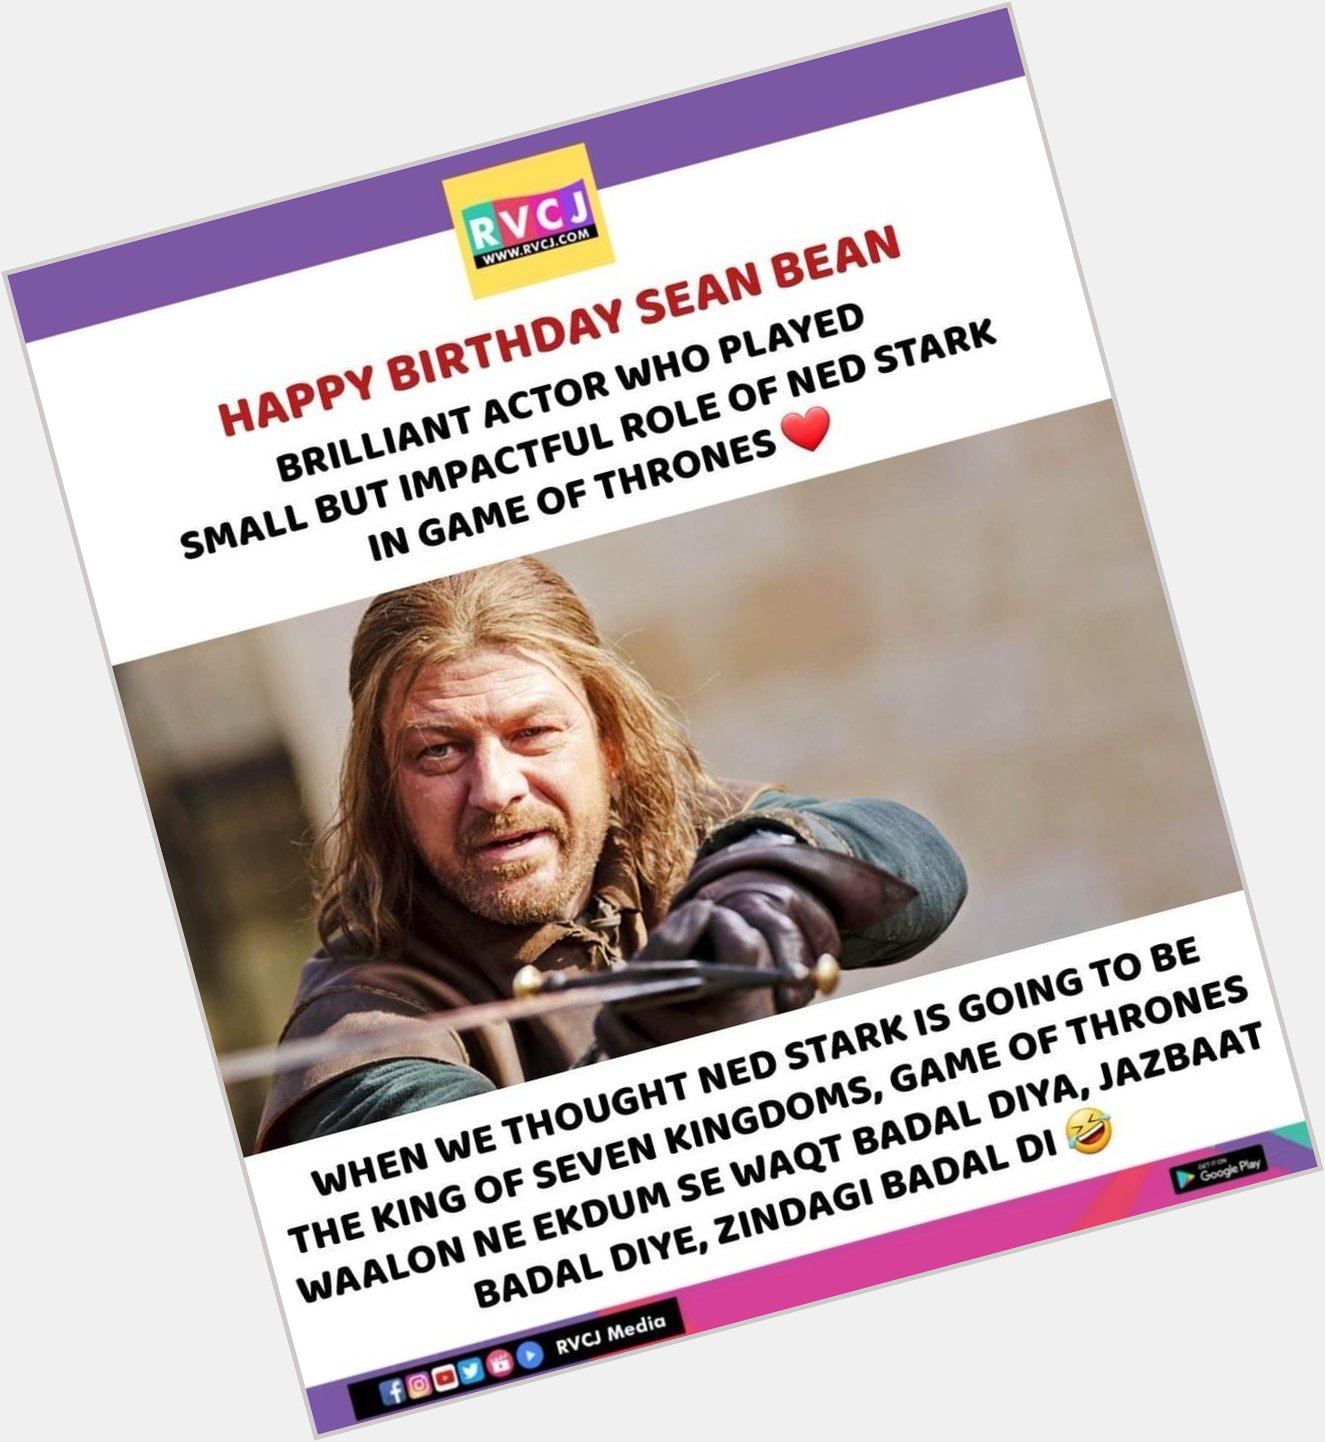 Happy Birthday Sean Bean!      